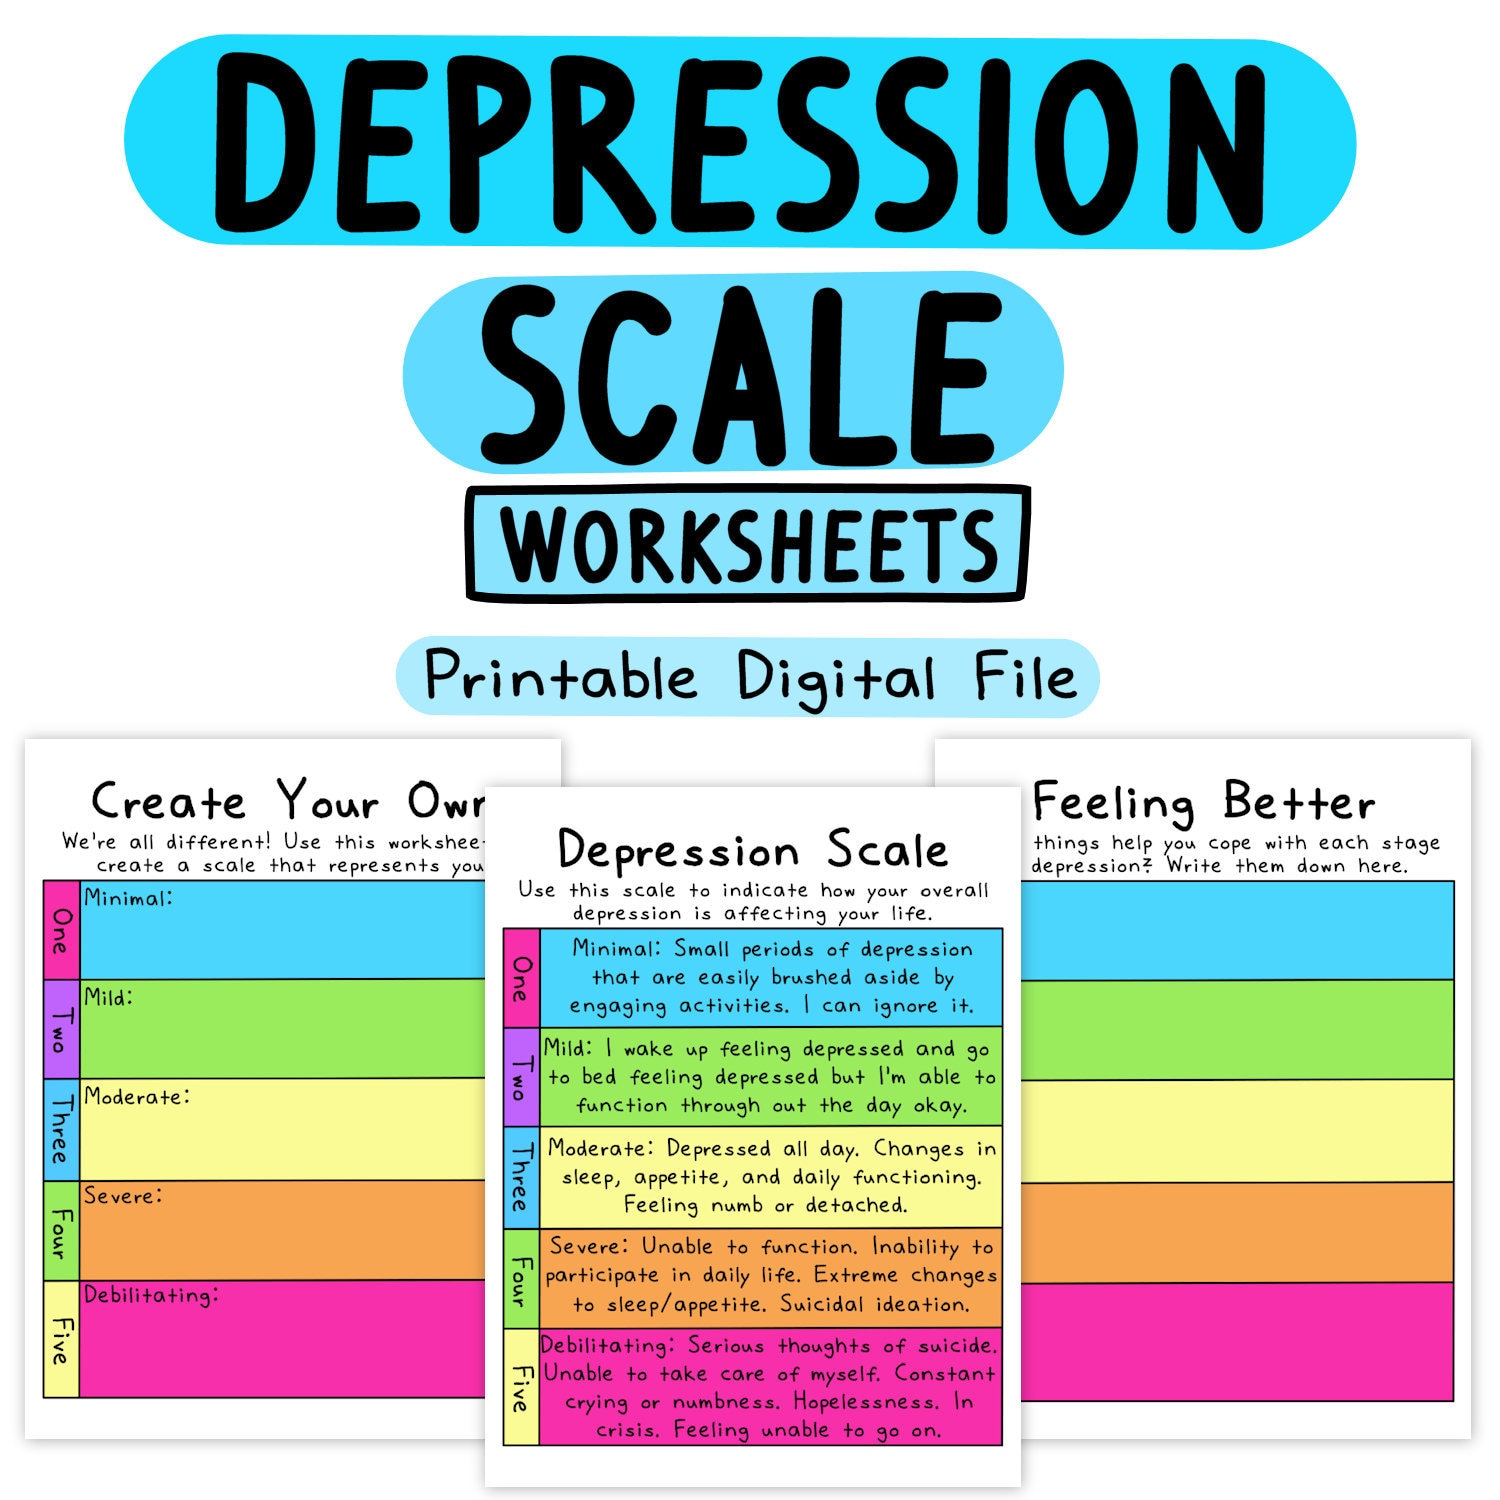 Depression Scale Depression Tools Worksheets Self-Help | Etsy